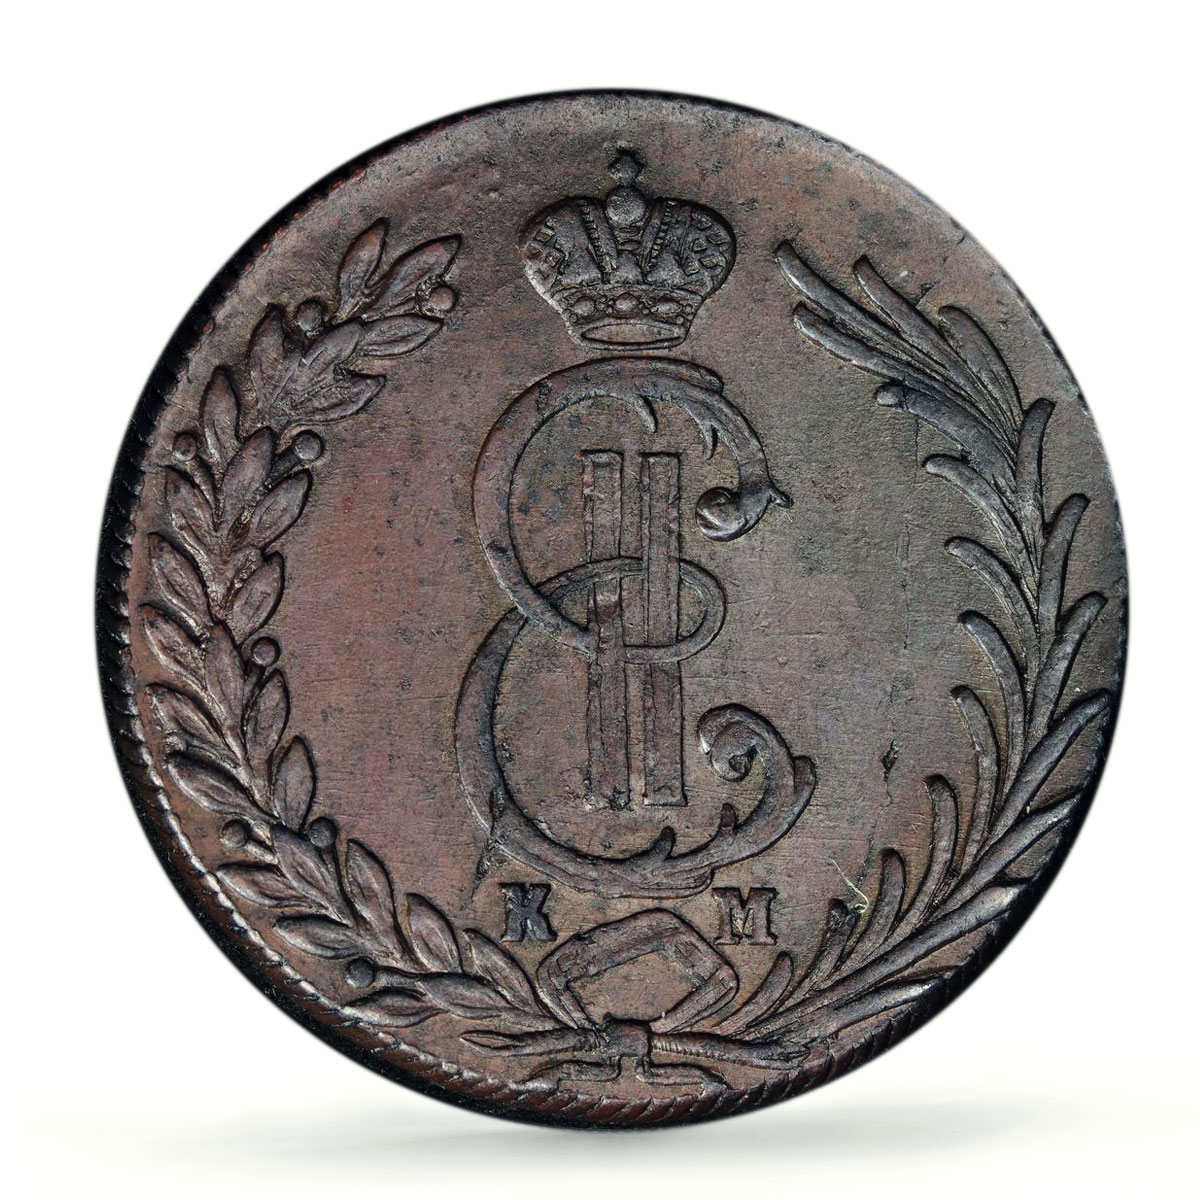 Russia Empire Siberia 10 kopecks Ekaterina II Coinage AU58 PCGS copper coin 1780